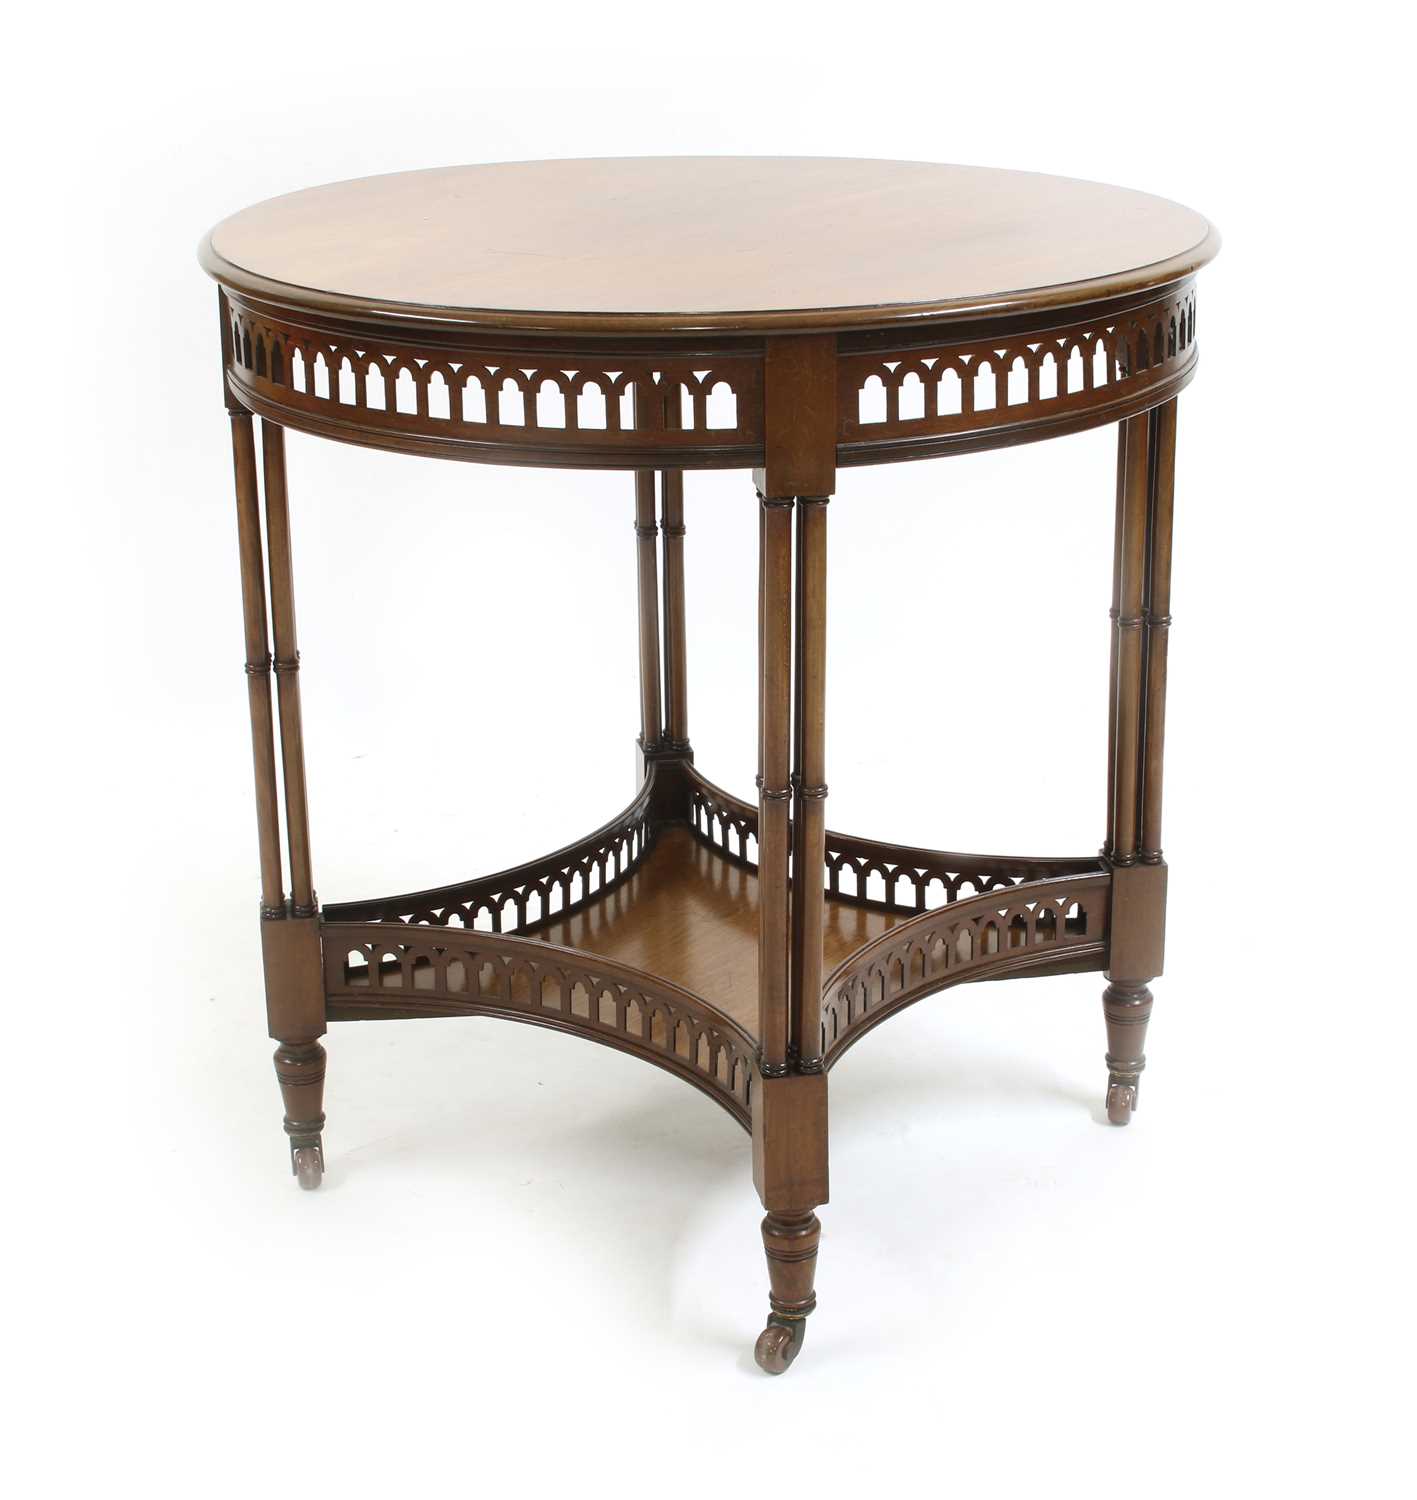 A late Victorian mahogany centre table